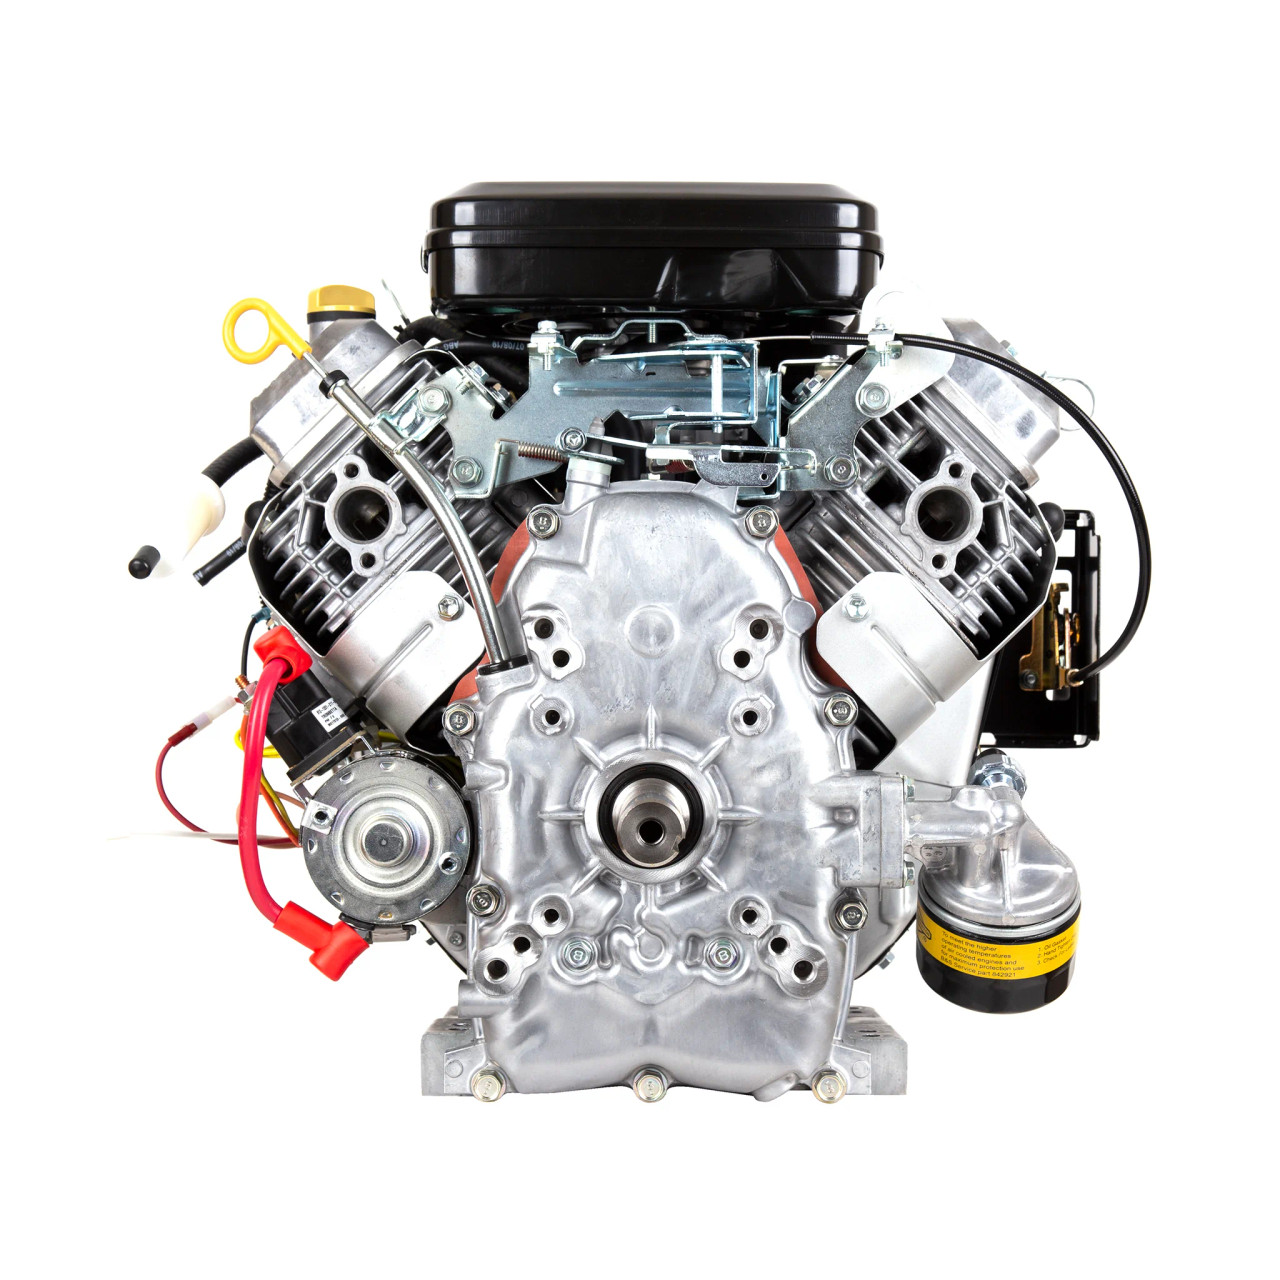 Vanguard 18.0 HP 570cc Horizontal Shaft Engine 356447-0051-G1